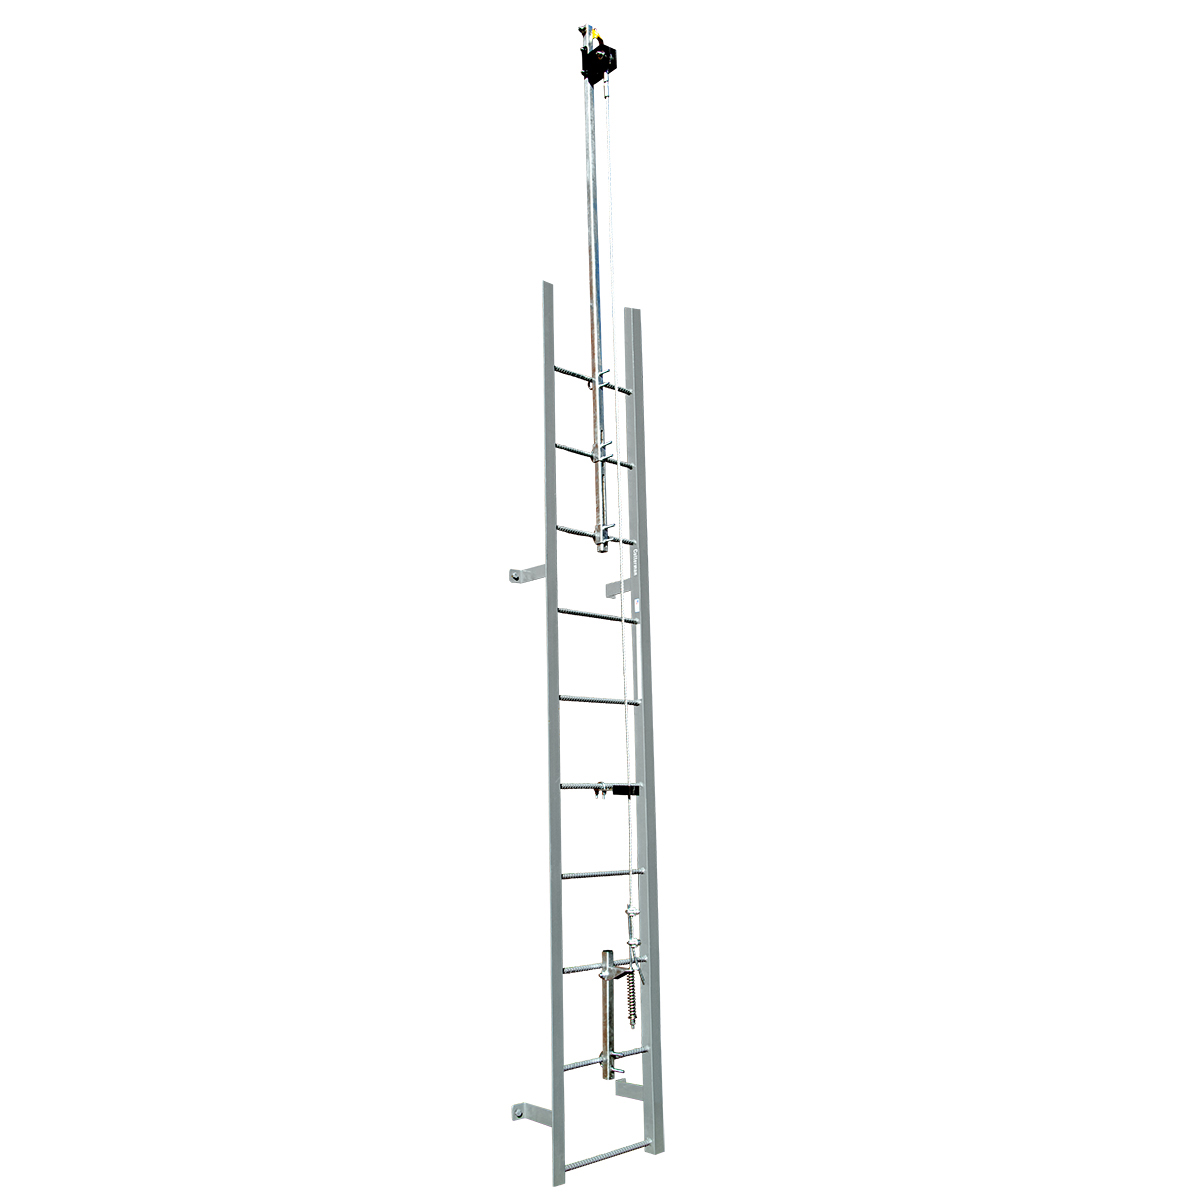 SafeWaze 70' VLL Cable Ladder System w/Extended Top Bracket, 2-person Complete Kit